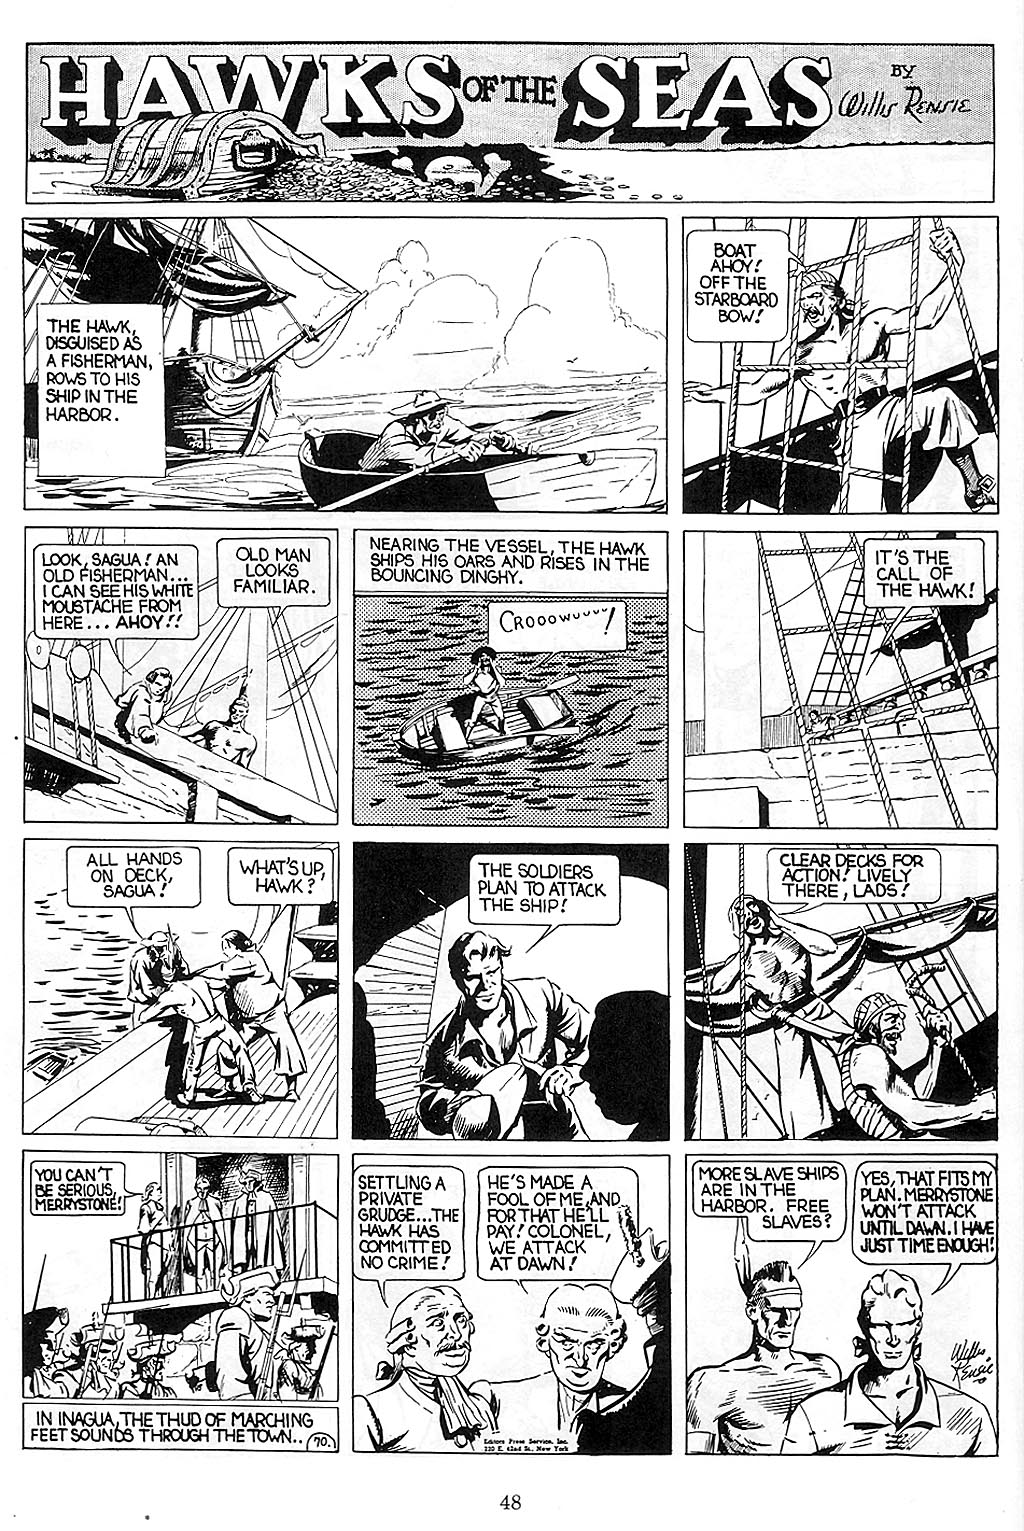 Read online Will Eisner's Hawks of the Seas comic -  Issue # TPB - 49